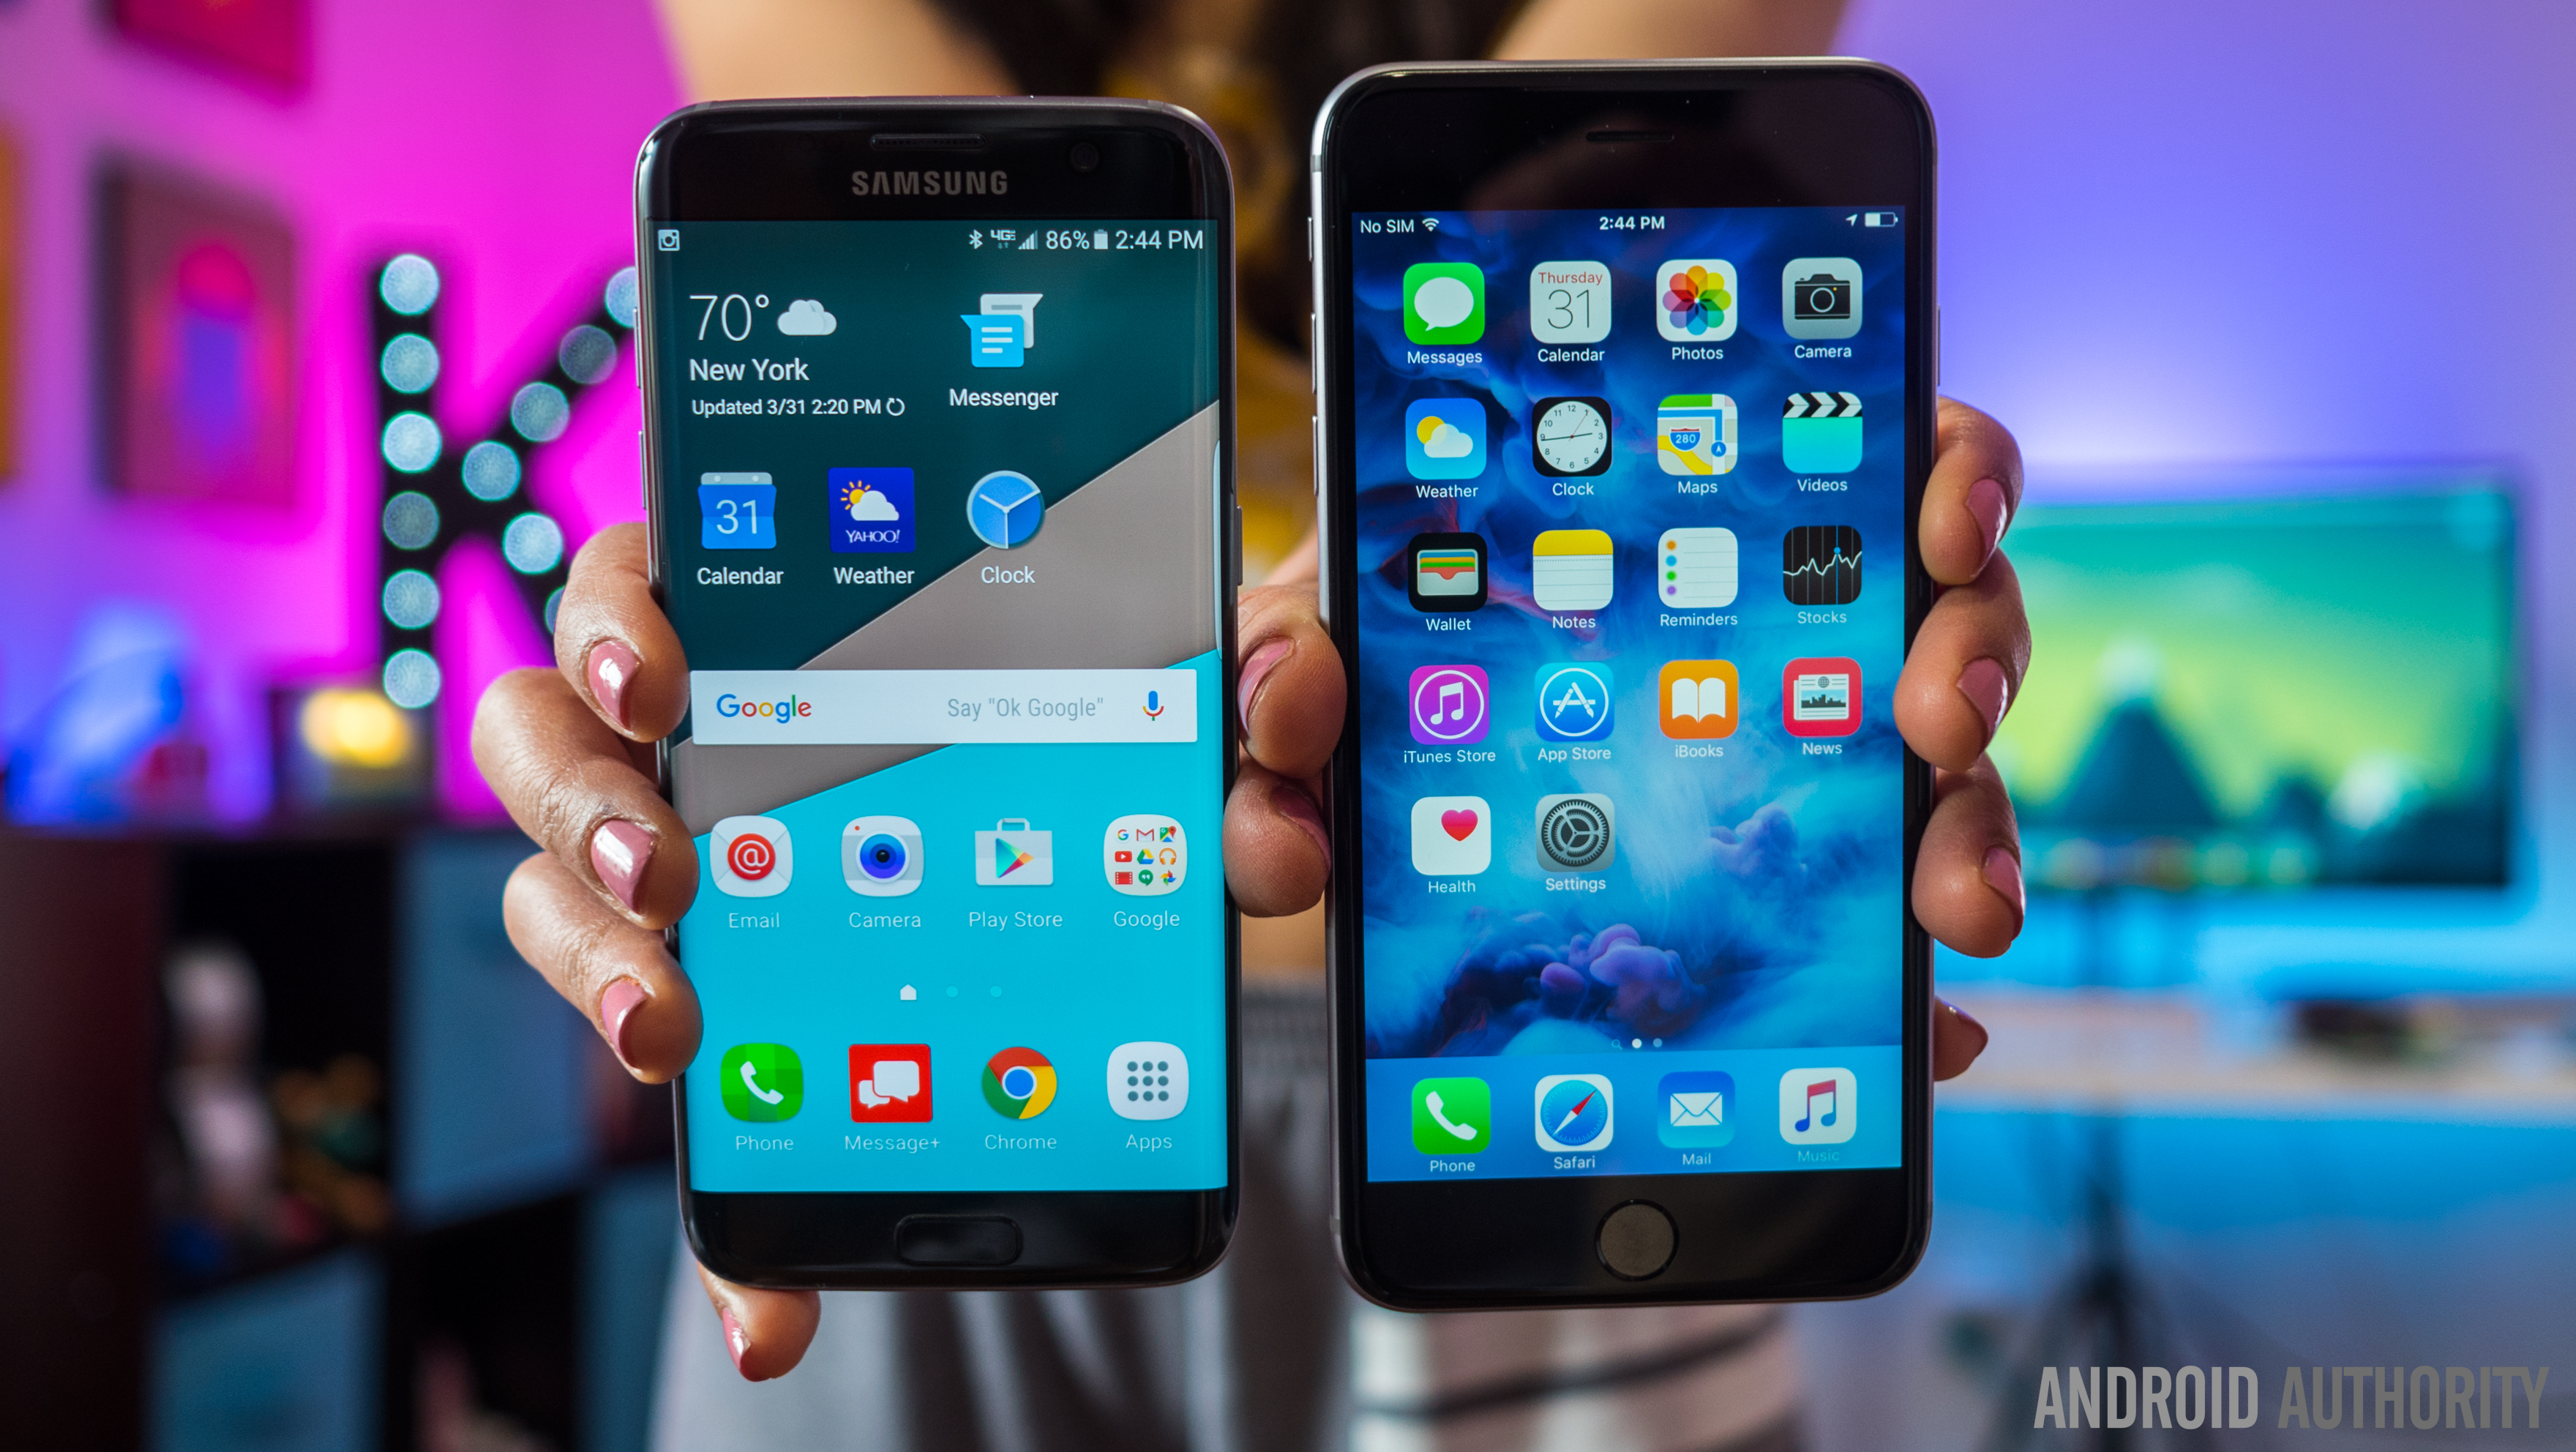 Galaxy-S7-Edge-vs-iPhone-6s-plus-14of18